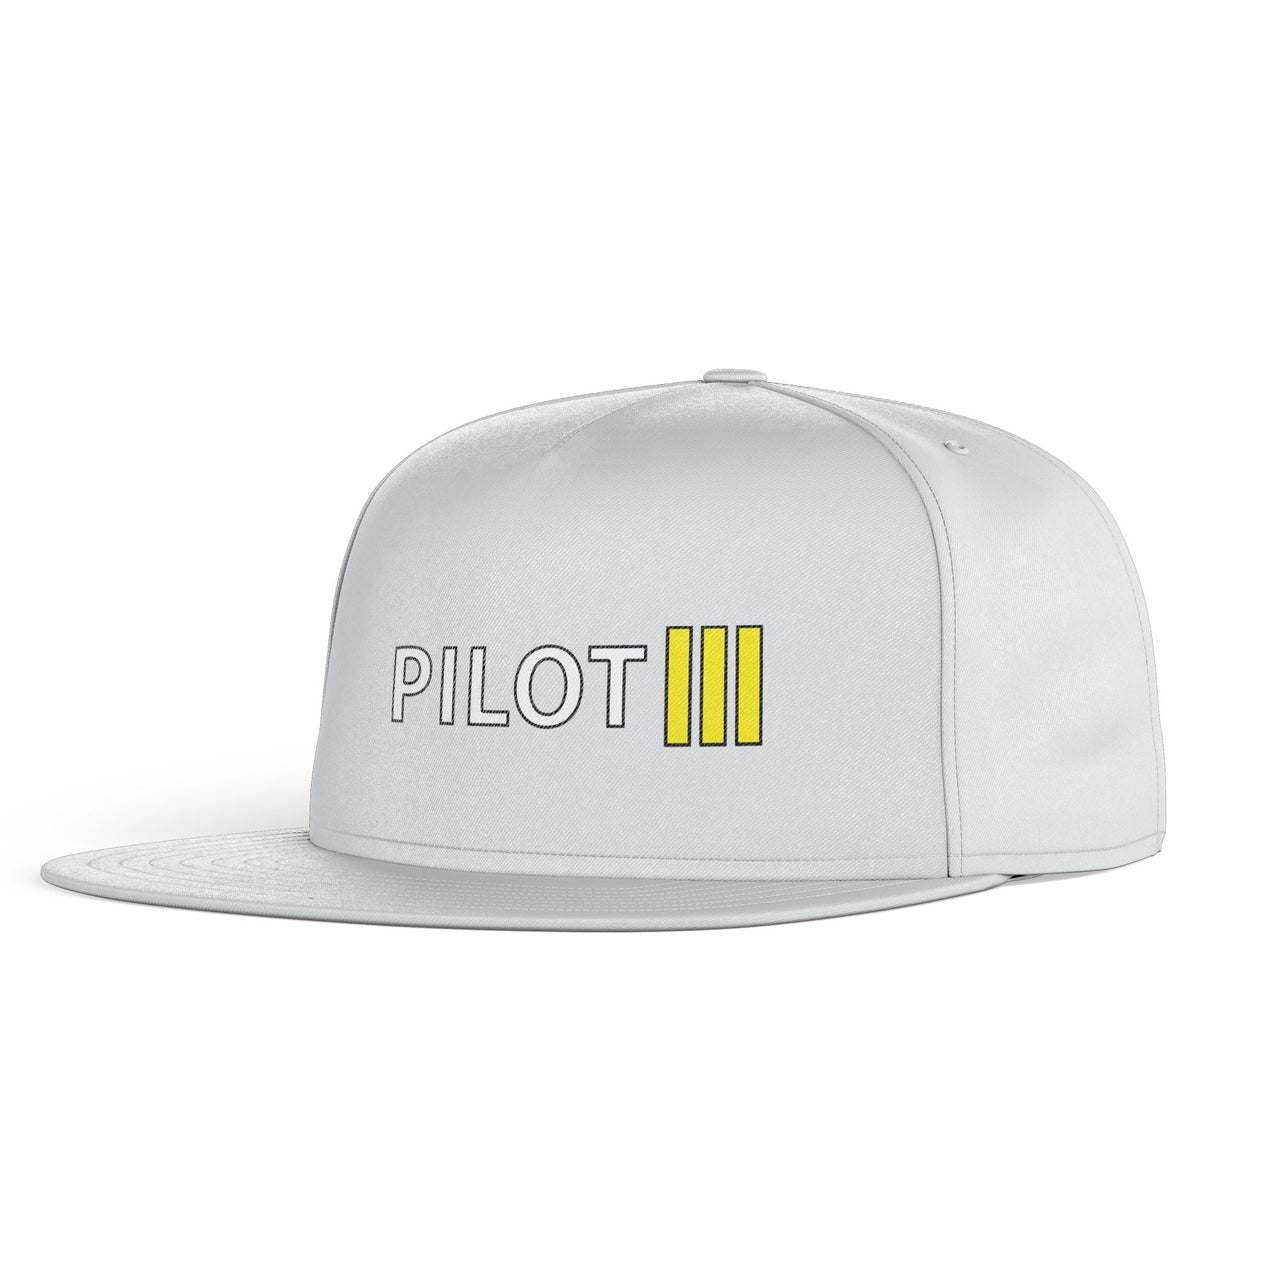 Pilot & Stripes (3 Lines) Designed Snapback Caps & Hats